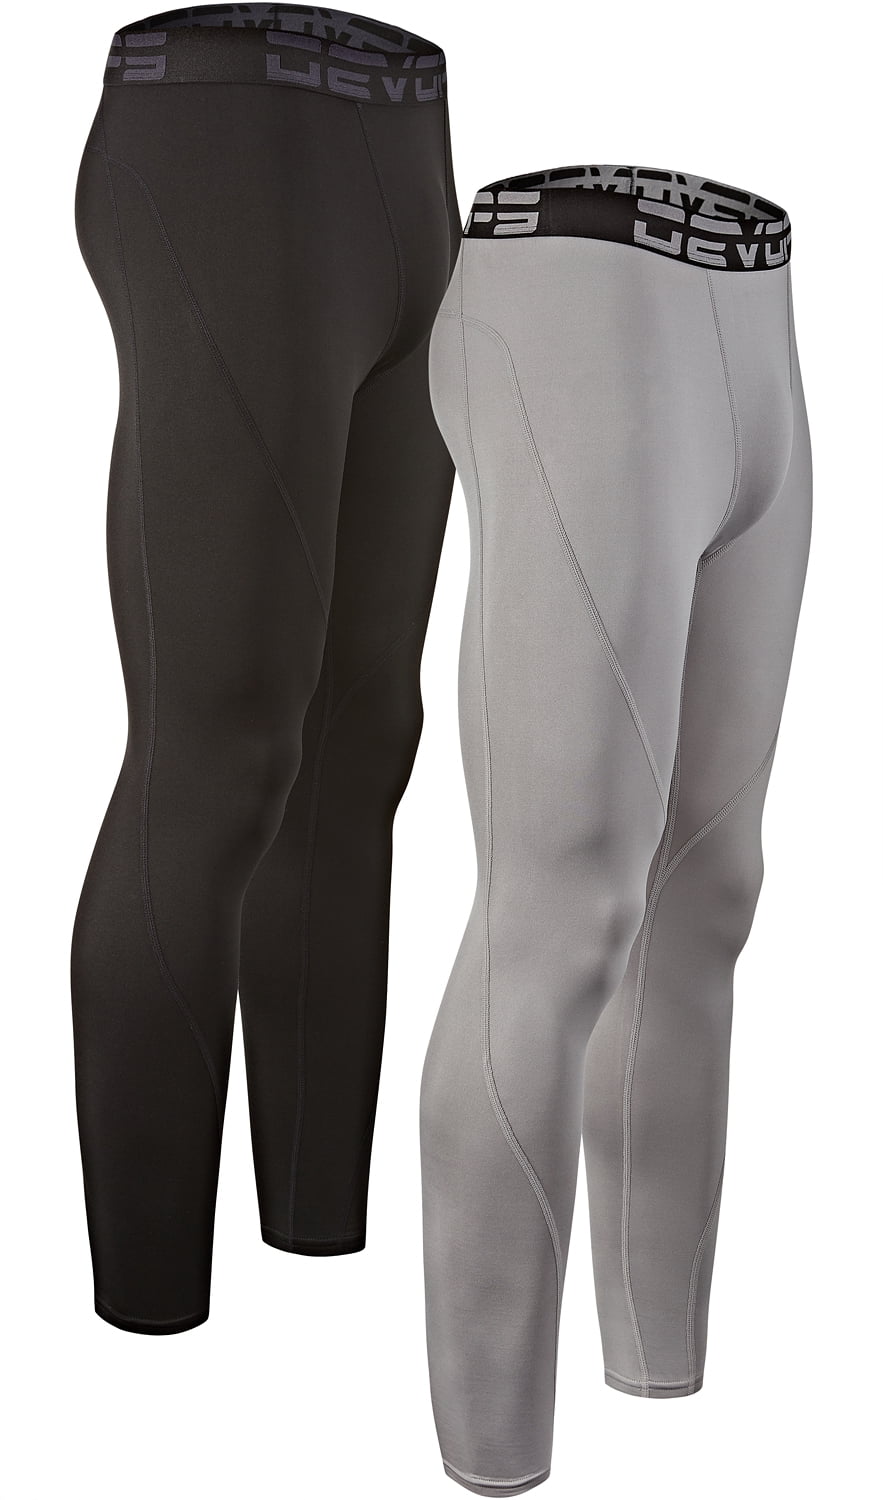 DEVOPS 2 Pack Men's thermal compression pants, Athletic sports Leggings  (2X-Large, Black/White)